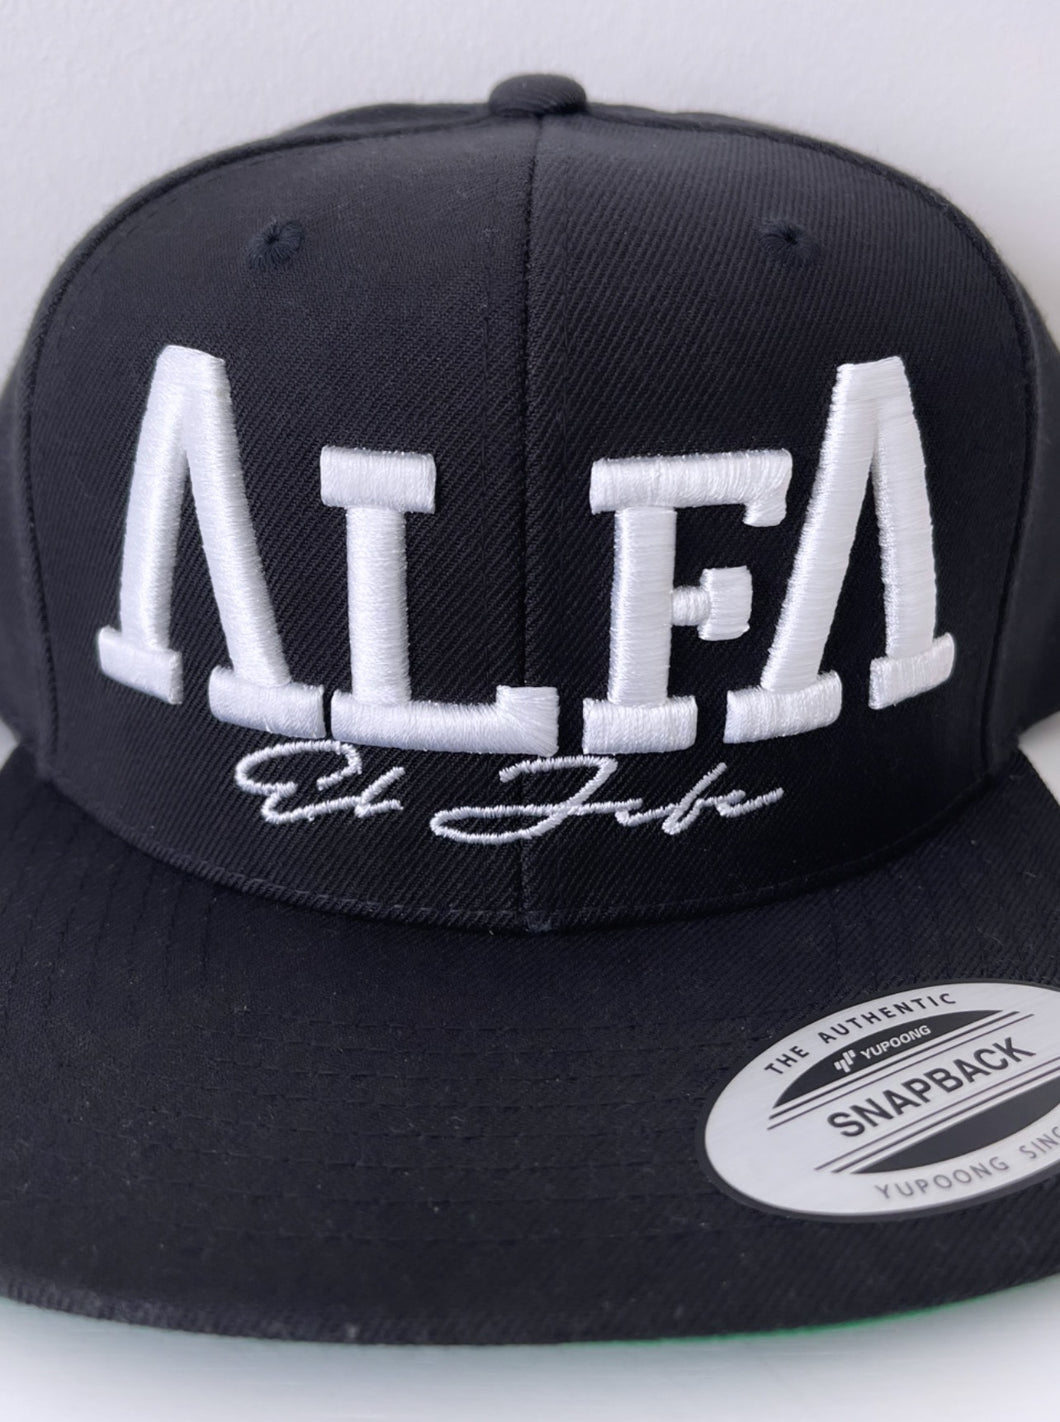 El Alfa El Jefe Hats (Black & White)